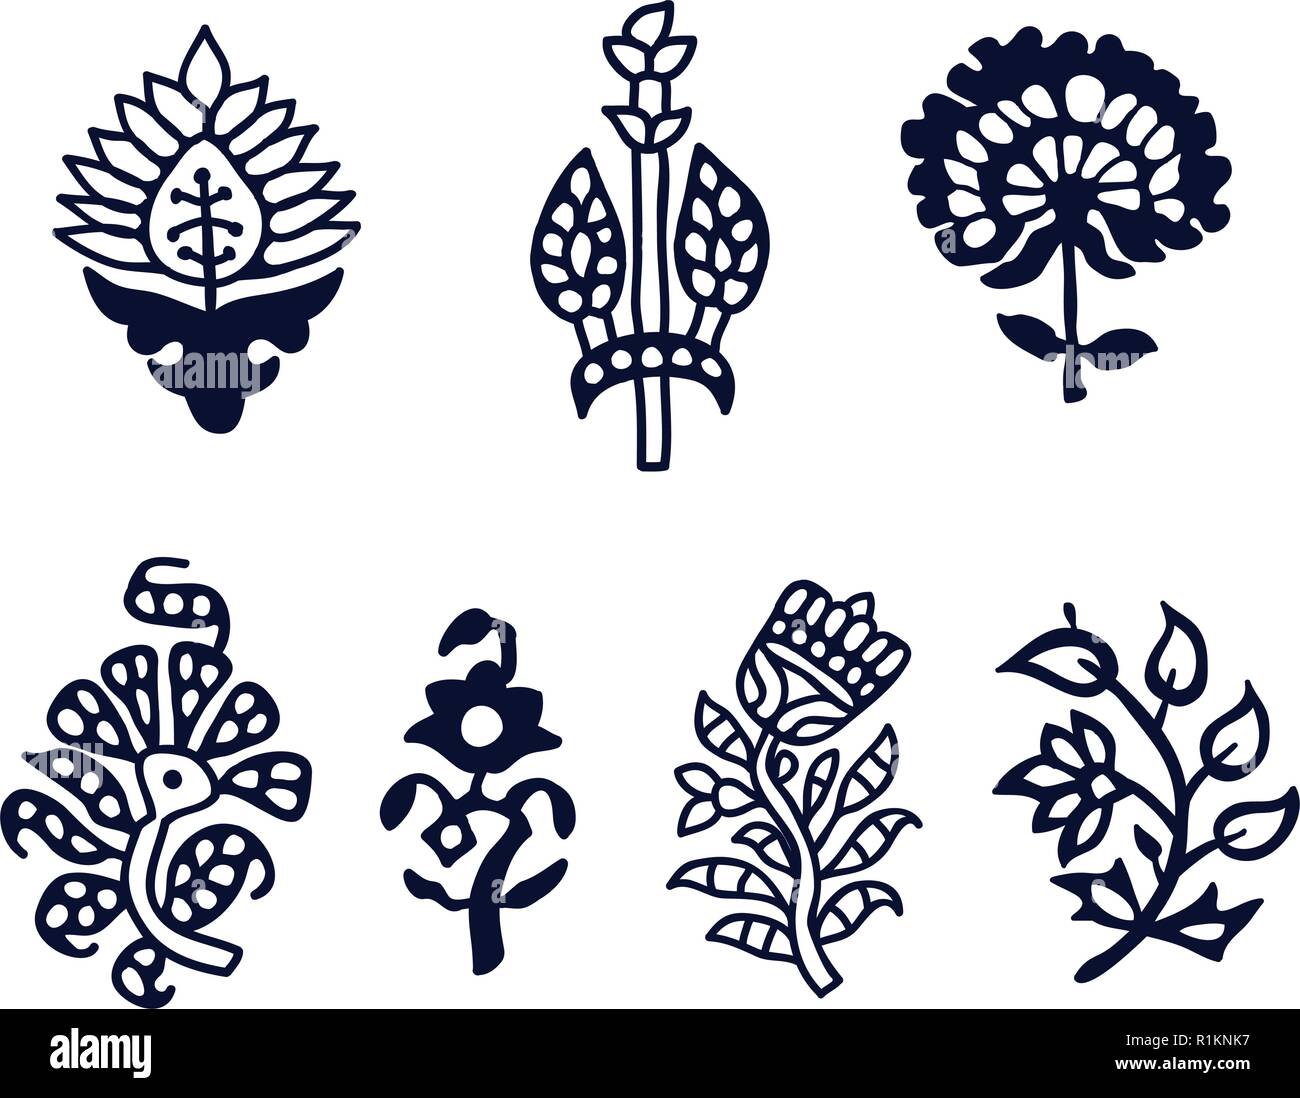 https://c8.alamy.com/comp/R1KNK7/set-of-7-wood-block-print-floral-elements-traditional-oriental-ethnic-motifs-of-india-kashmir-monochrome-R1KNK7.jpg